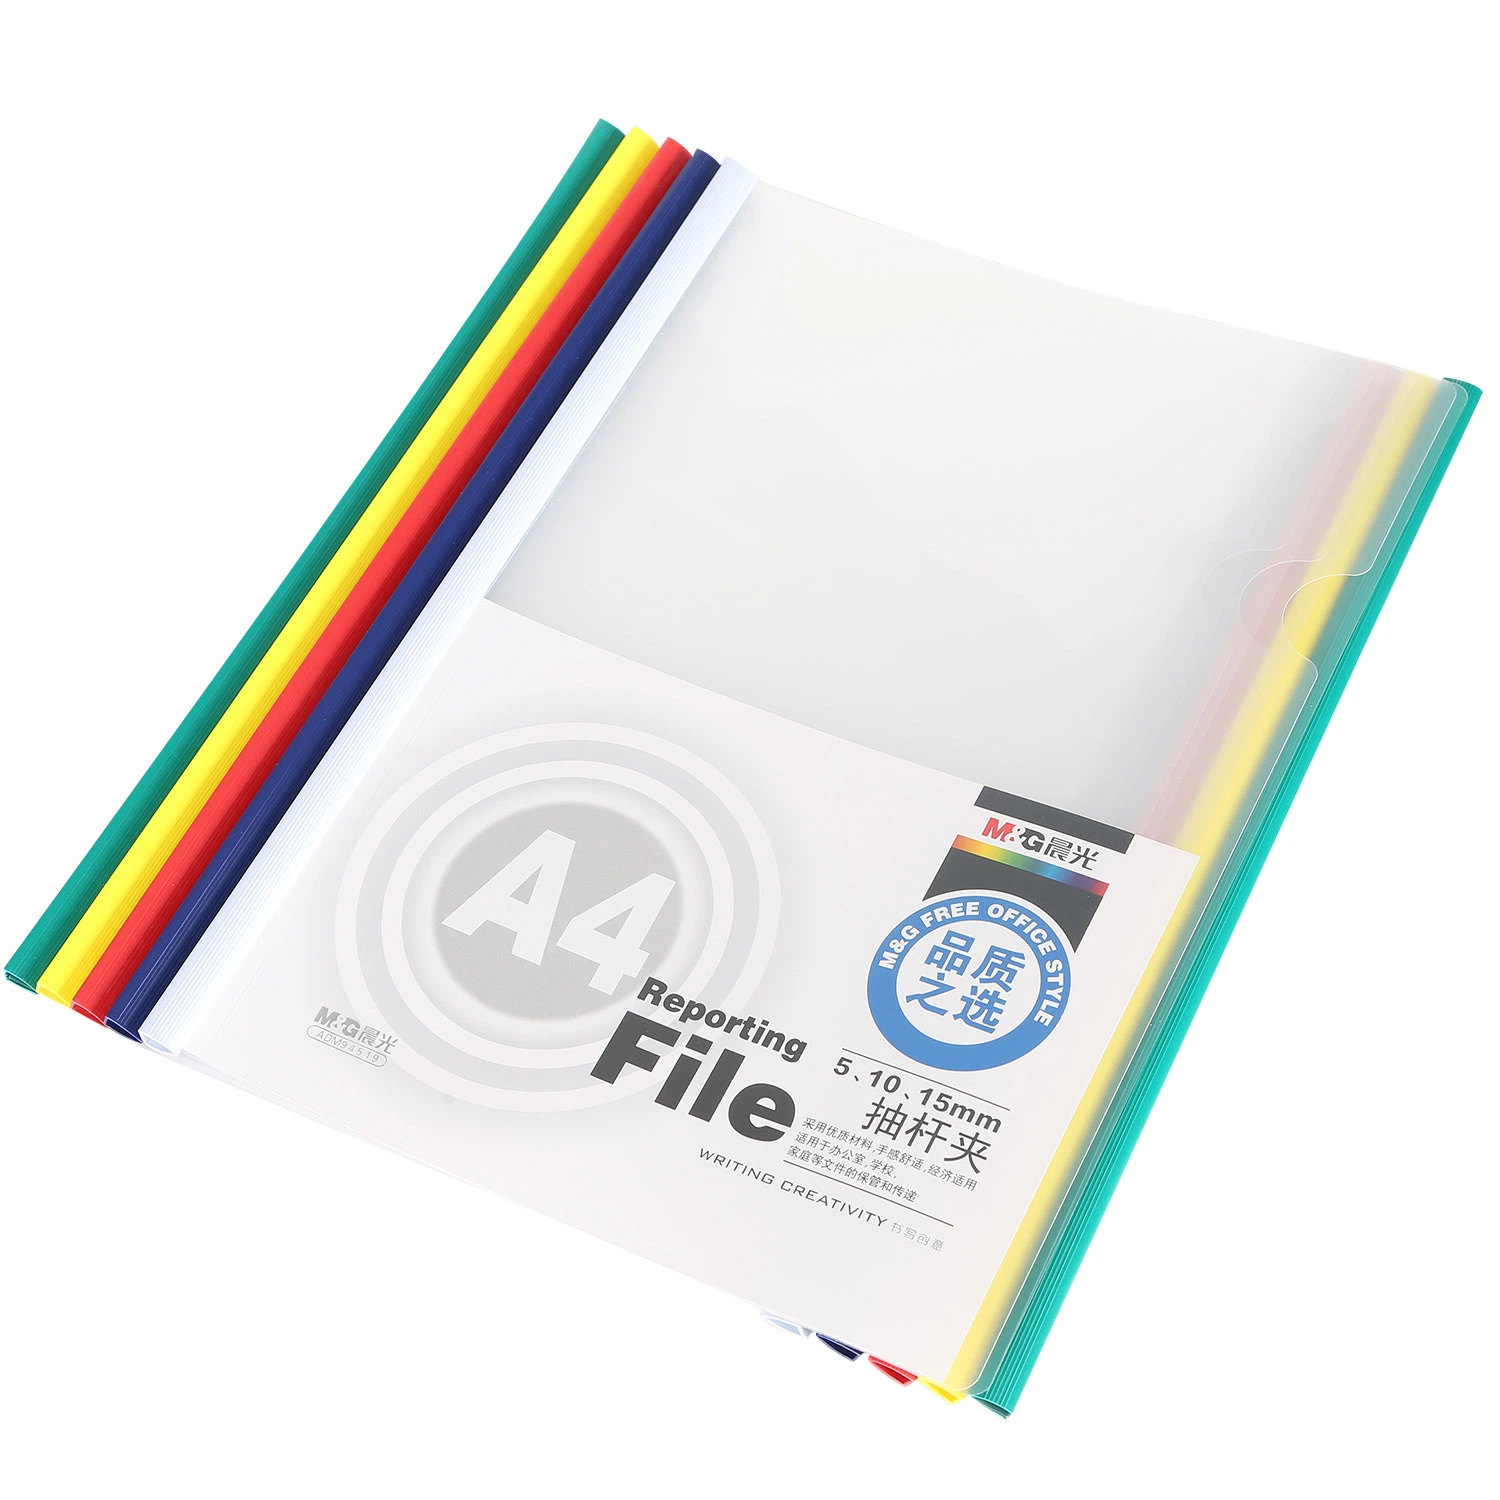 Waterproof Plastic Colorful Bars Sliding Bar Report File Folder